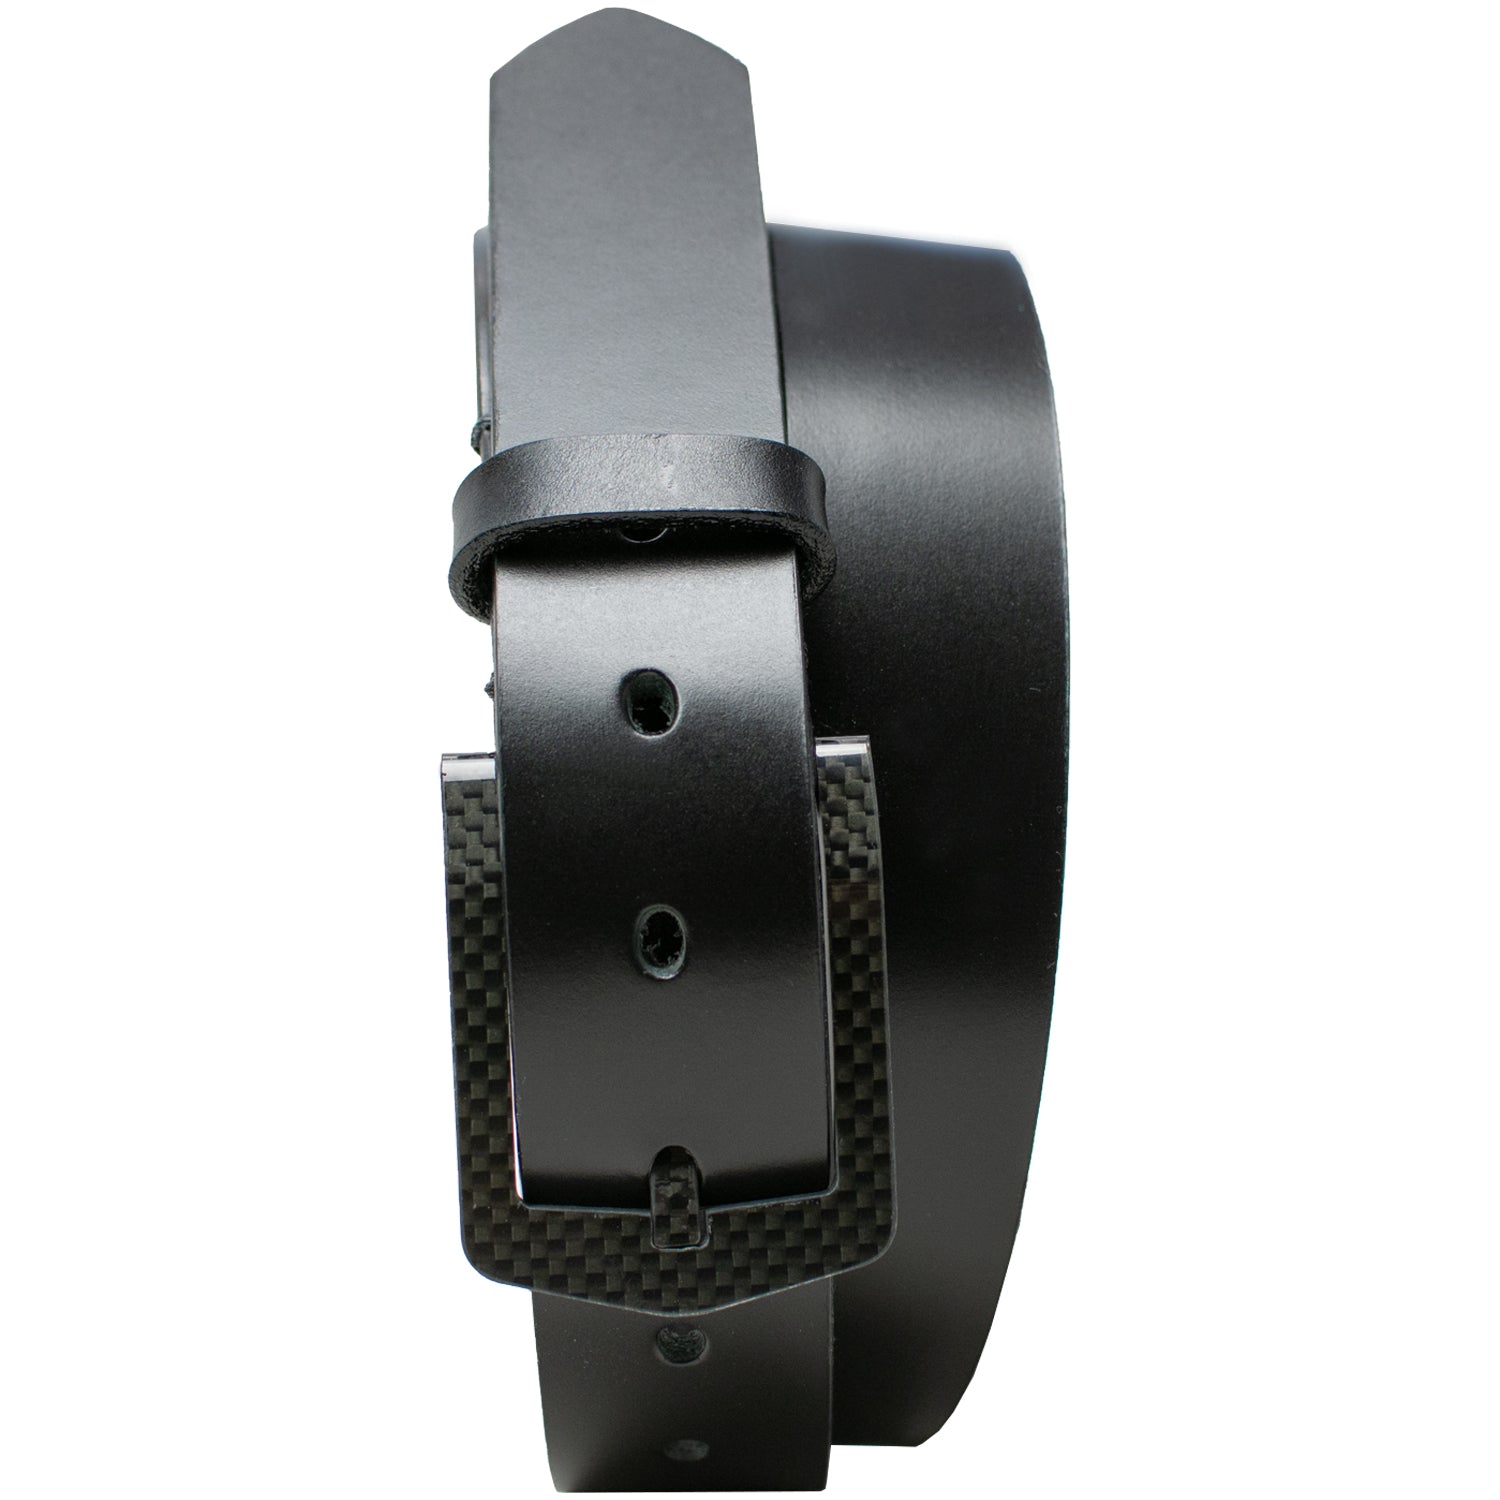 The Specialist Dress Leather Belt Set | Pilot Belt/Carbon Fiber Buckle 36 inch / Black and Brown / Carbon Fiber/Leather